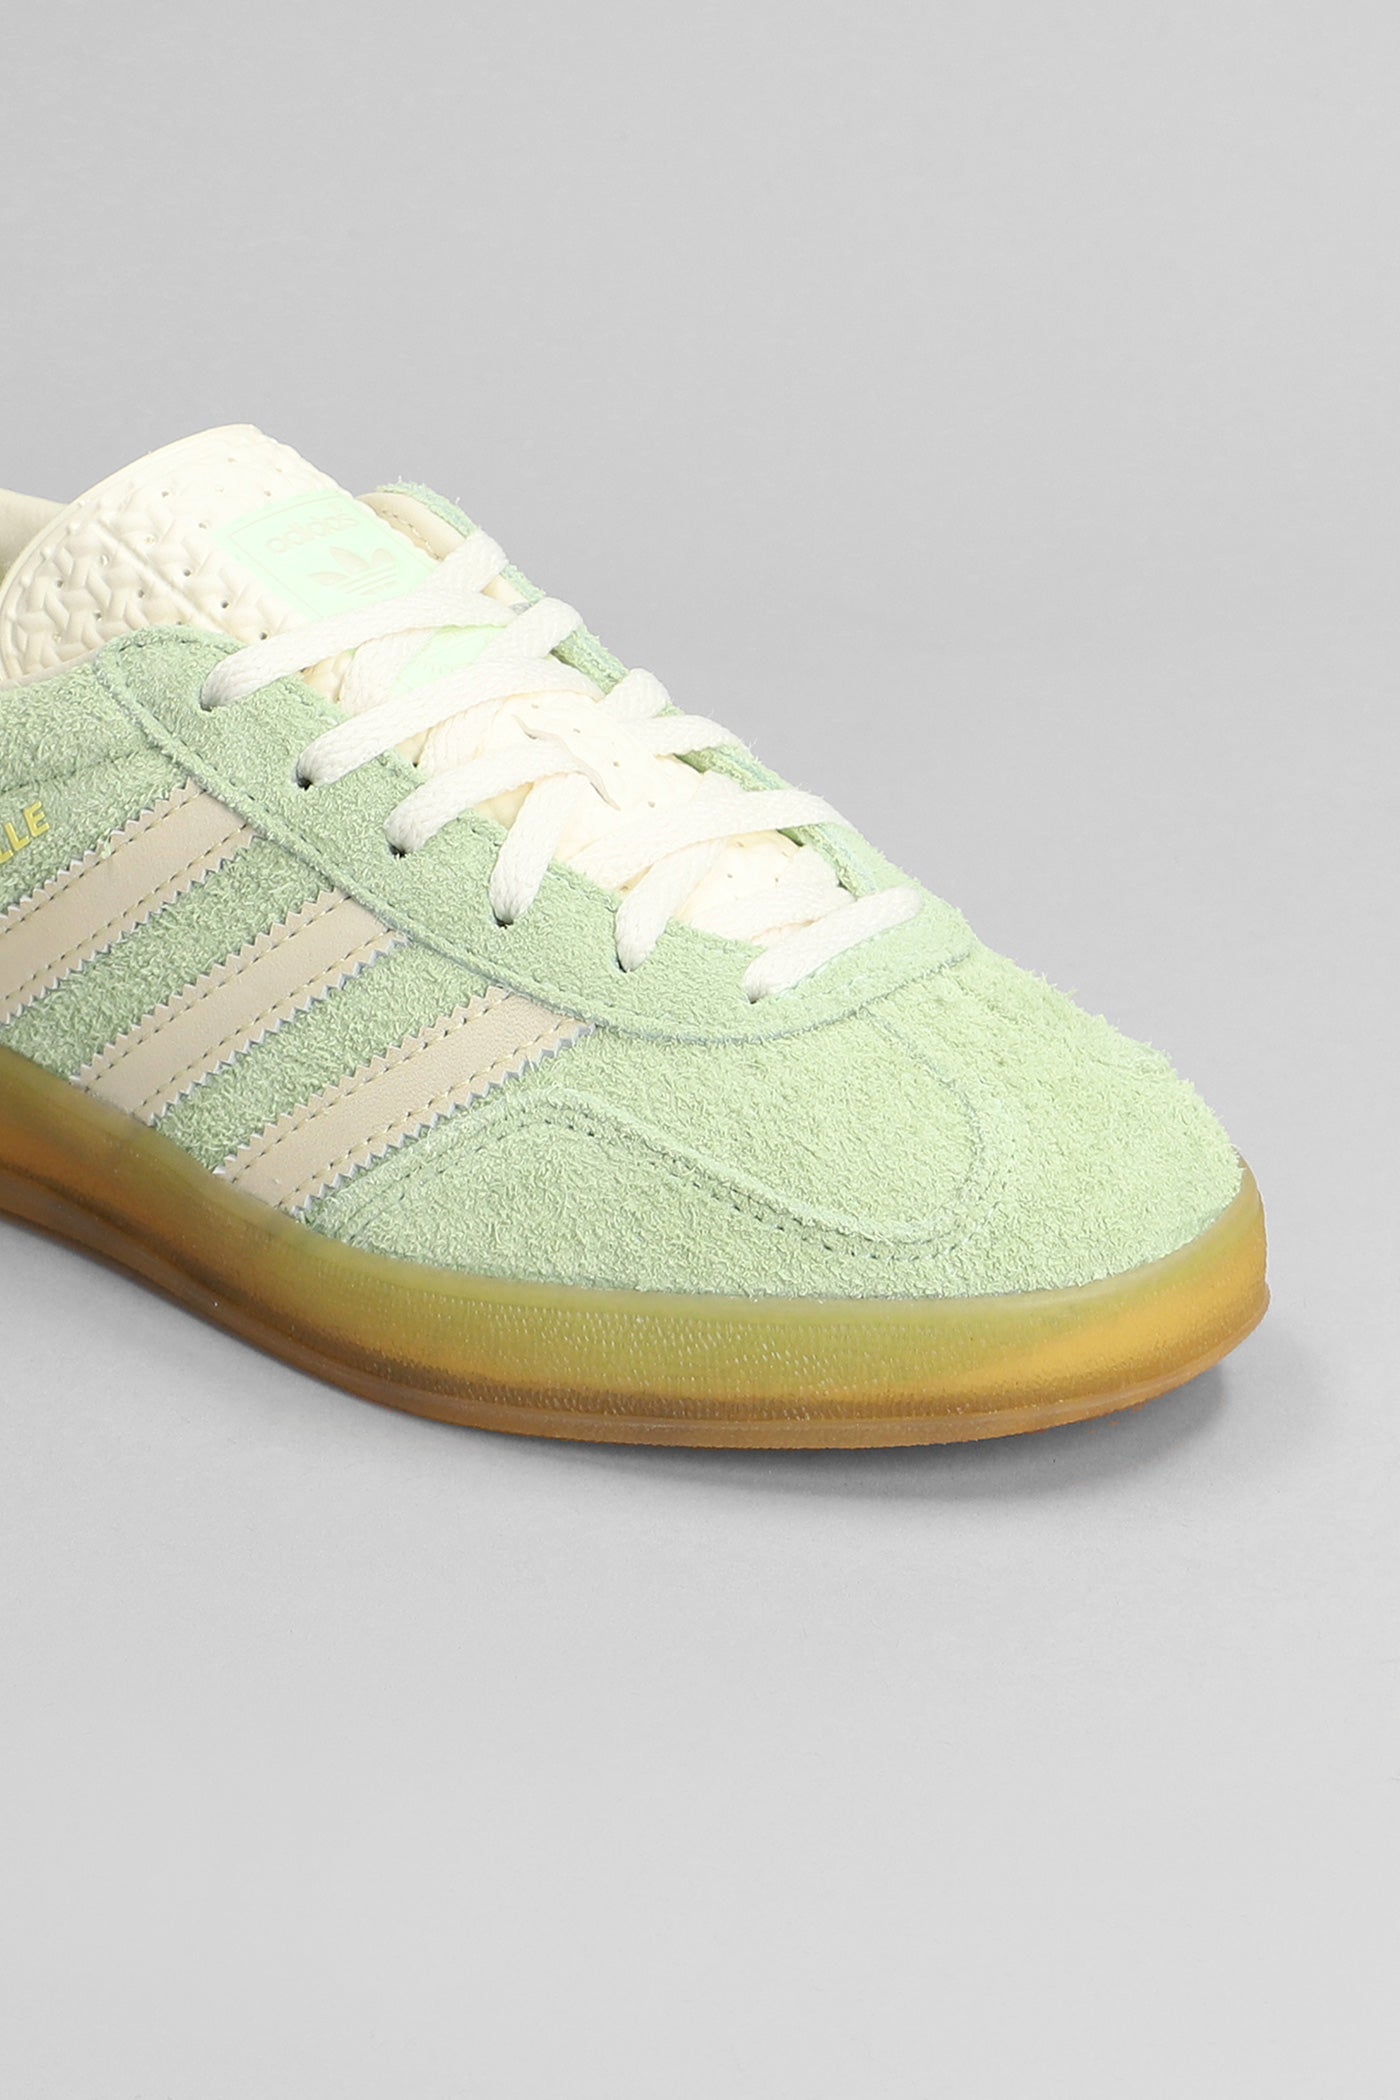 Sneakers in green suede